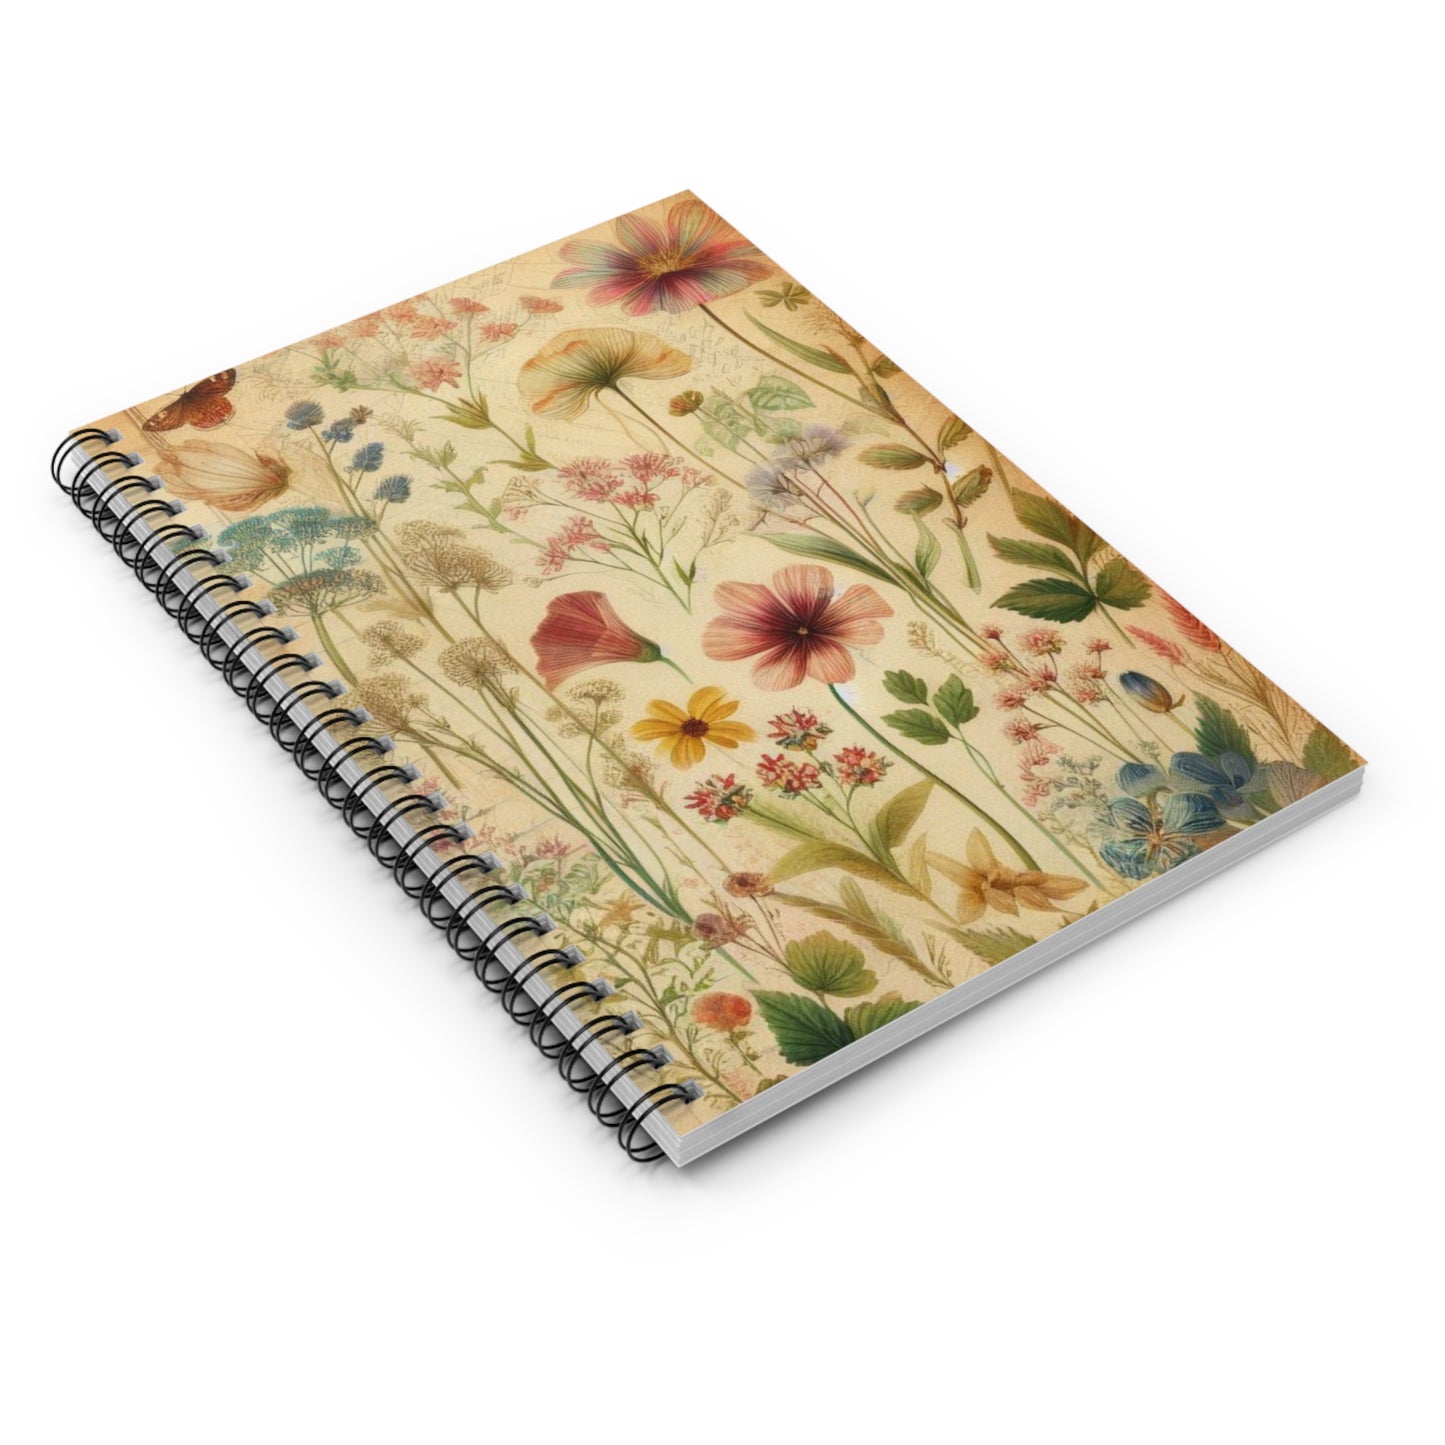 Floral Aged Paper Aesthetic Vintage Spiral Notebook